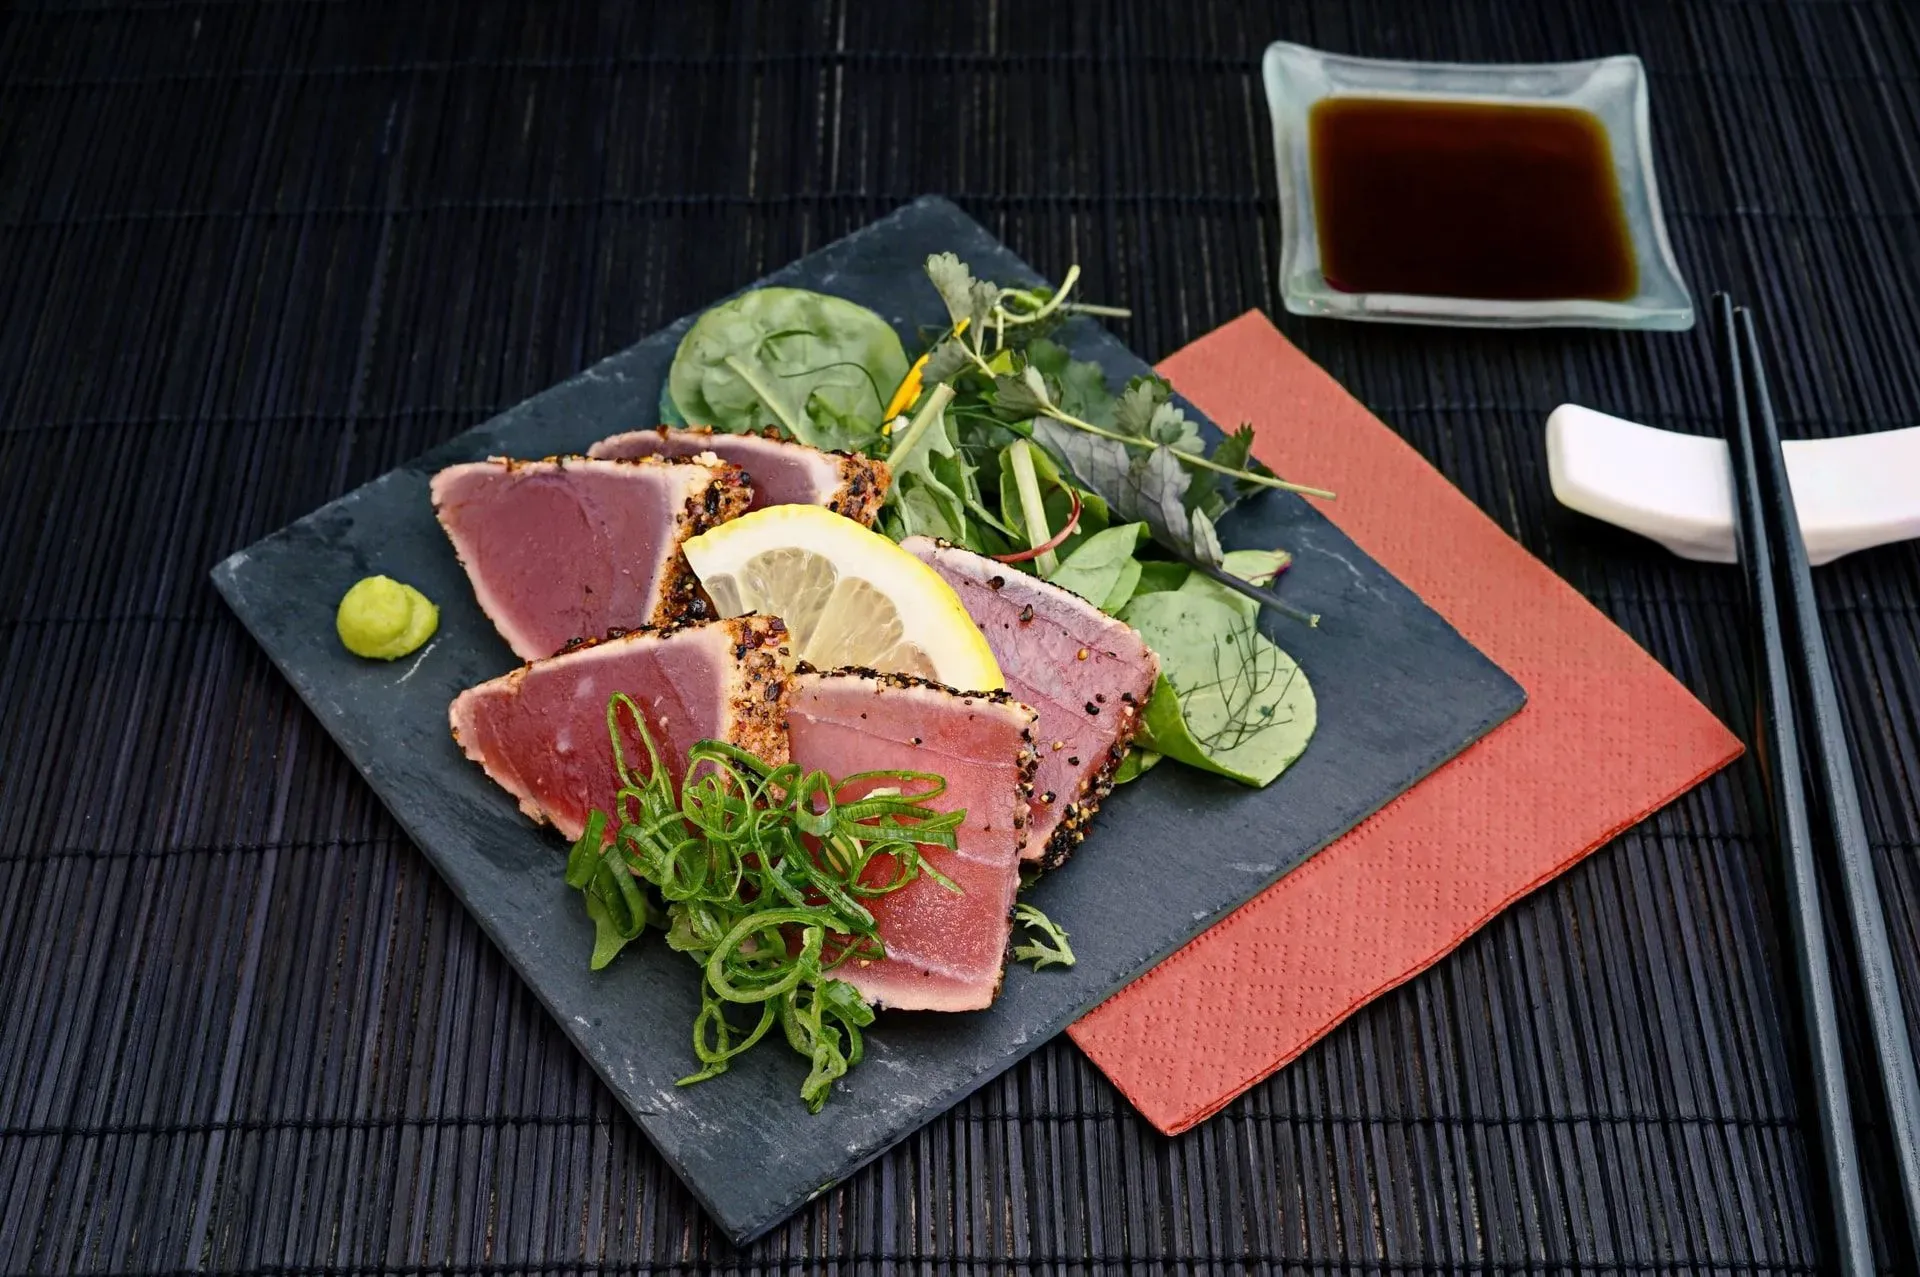 Tuna contains fewer calories than salmon.